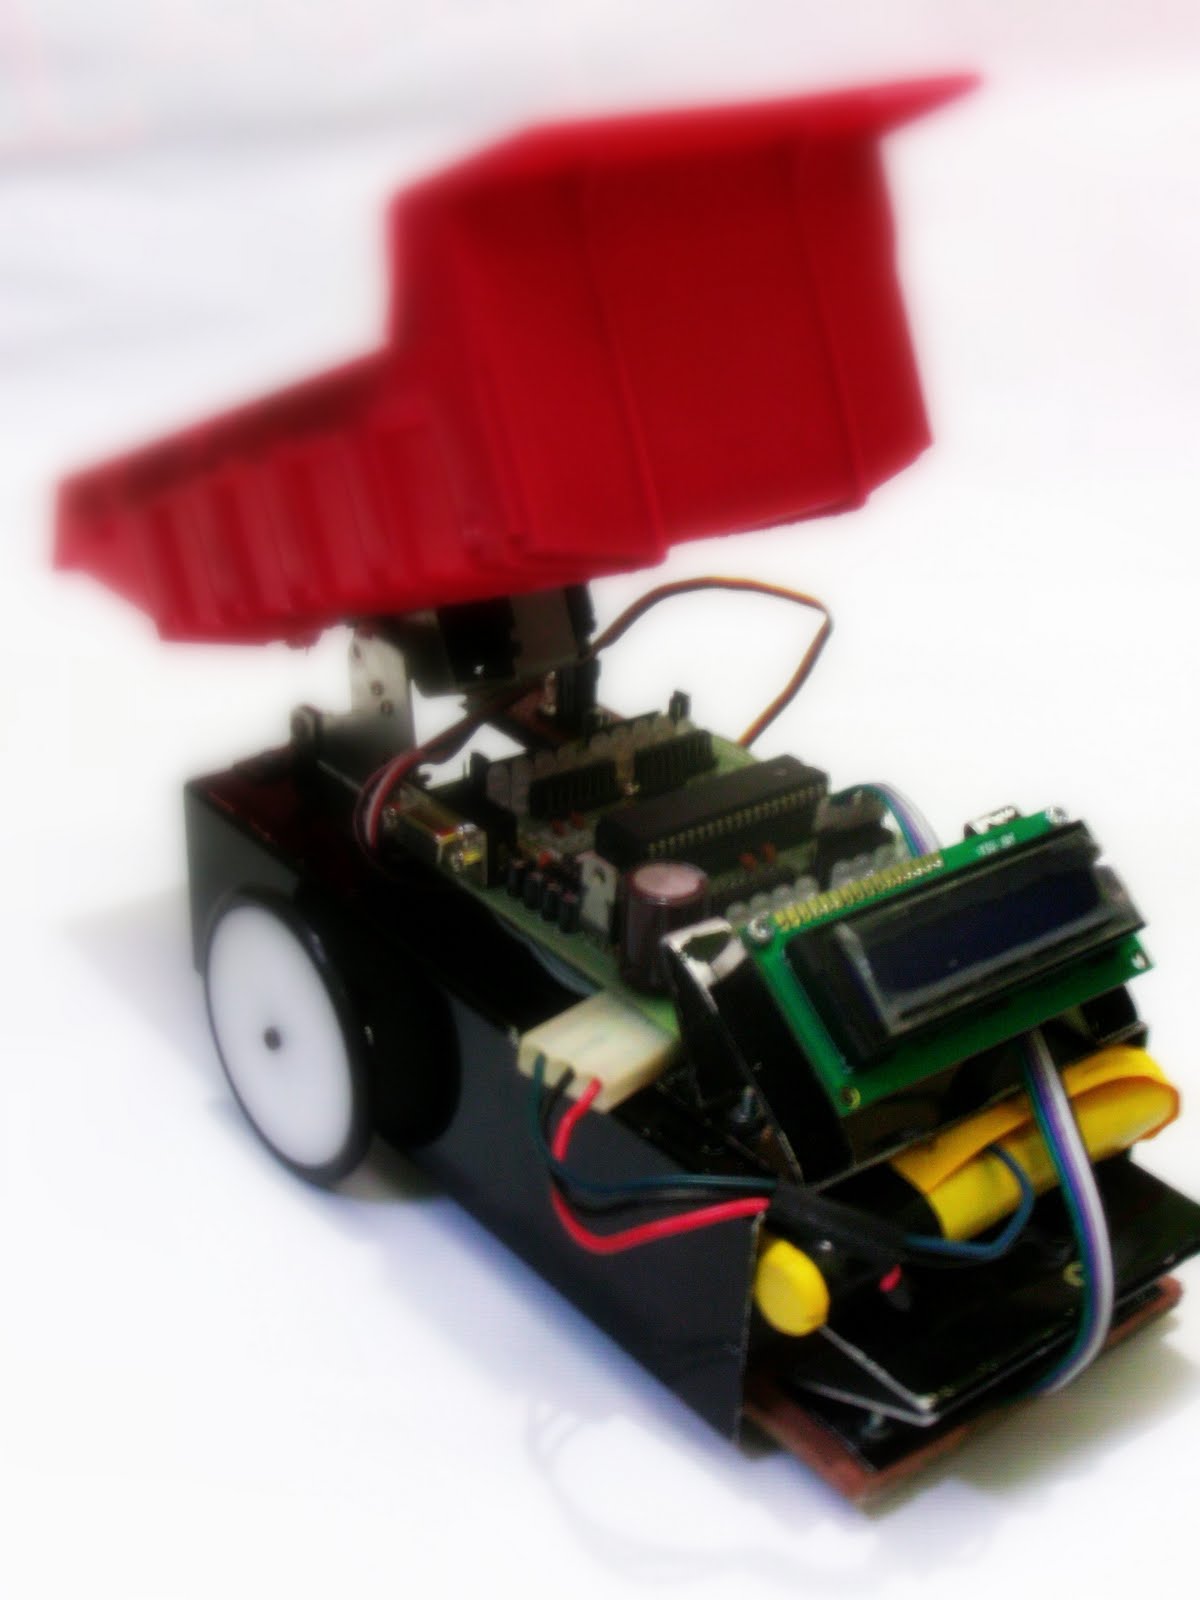 Penelitian dan pembuatan robot iTrash telah menjadikan suatu teknologi baru dalam memanfaatkan ATmega 32 sebagai prosessor pada robot